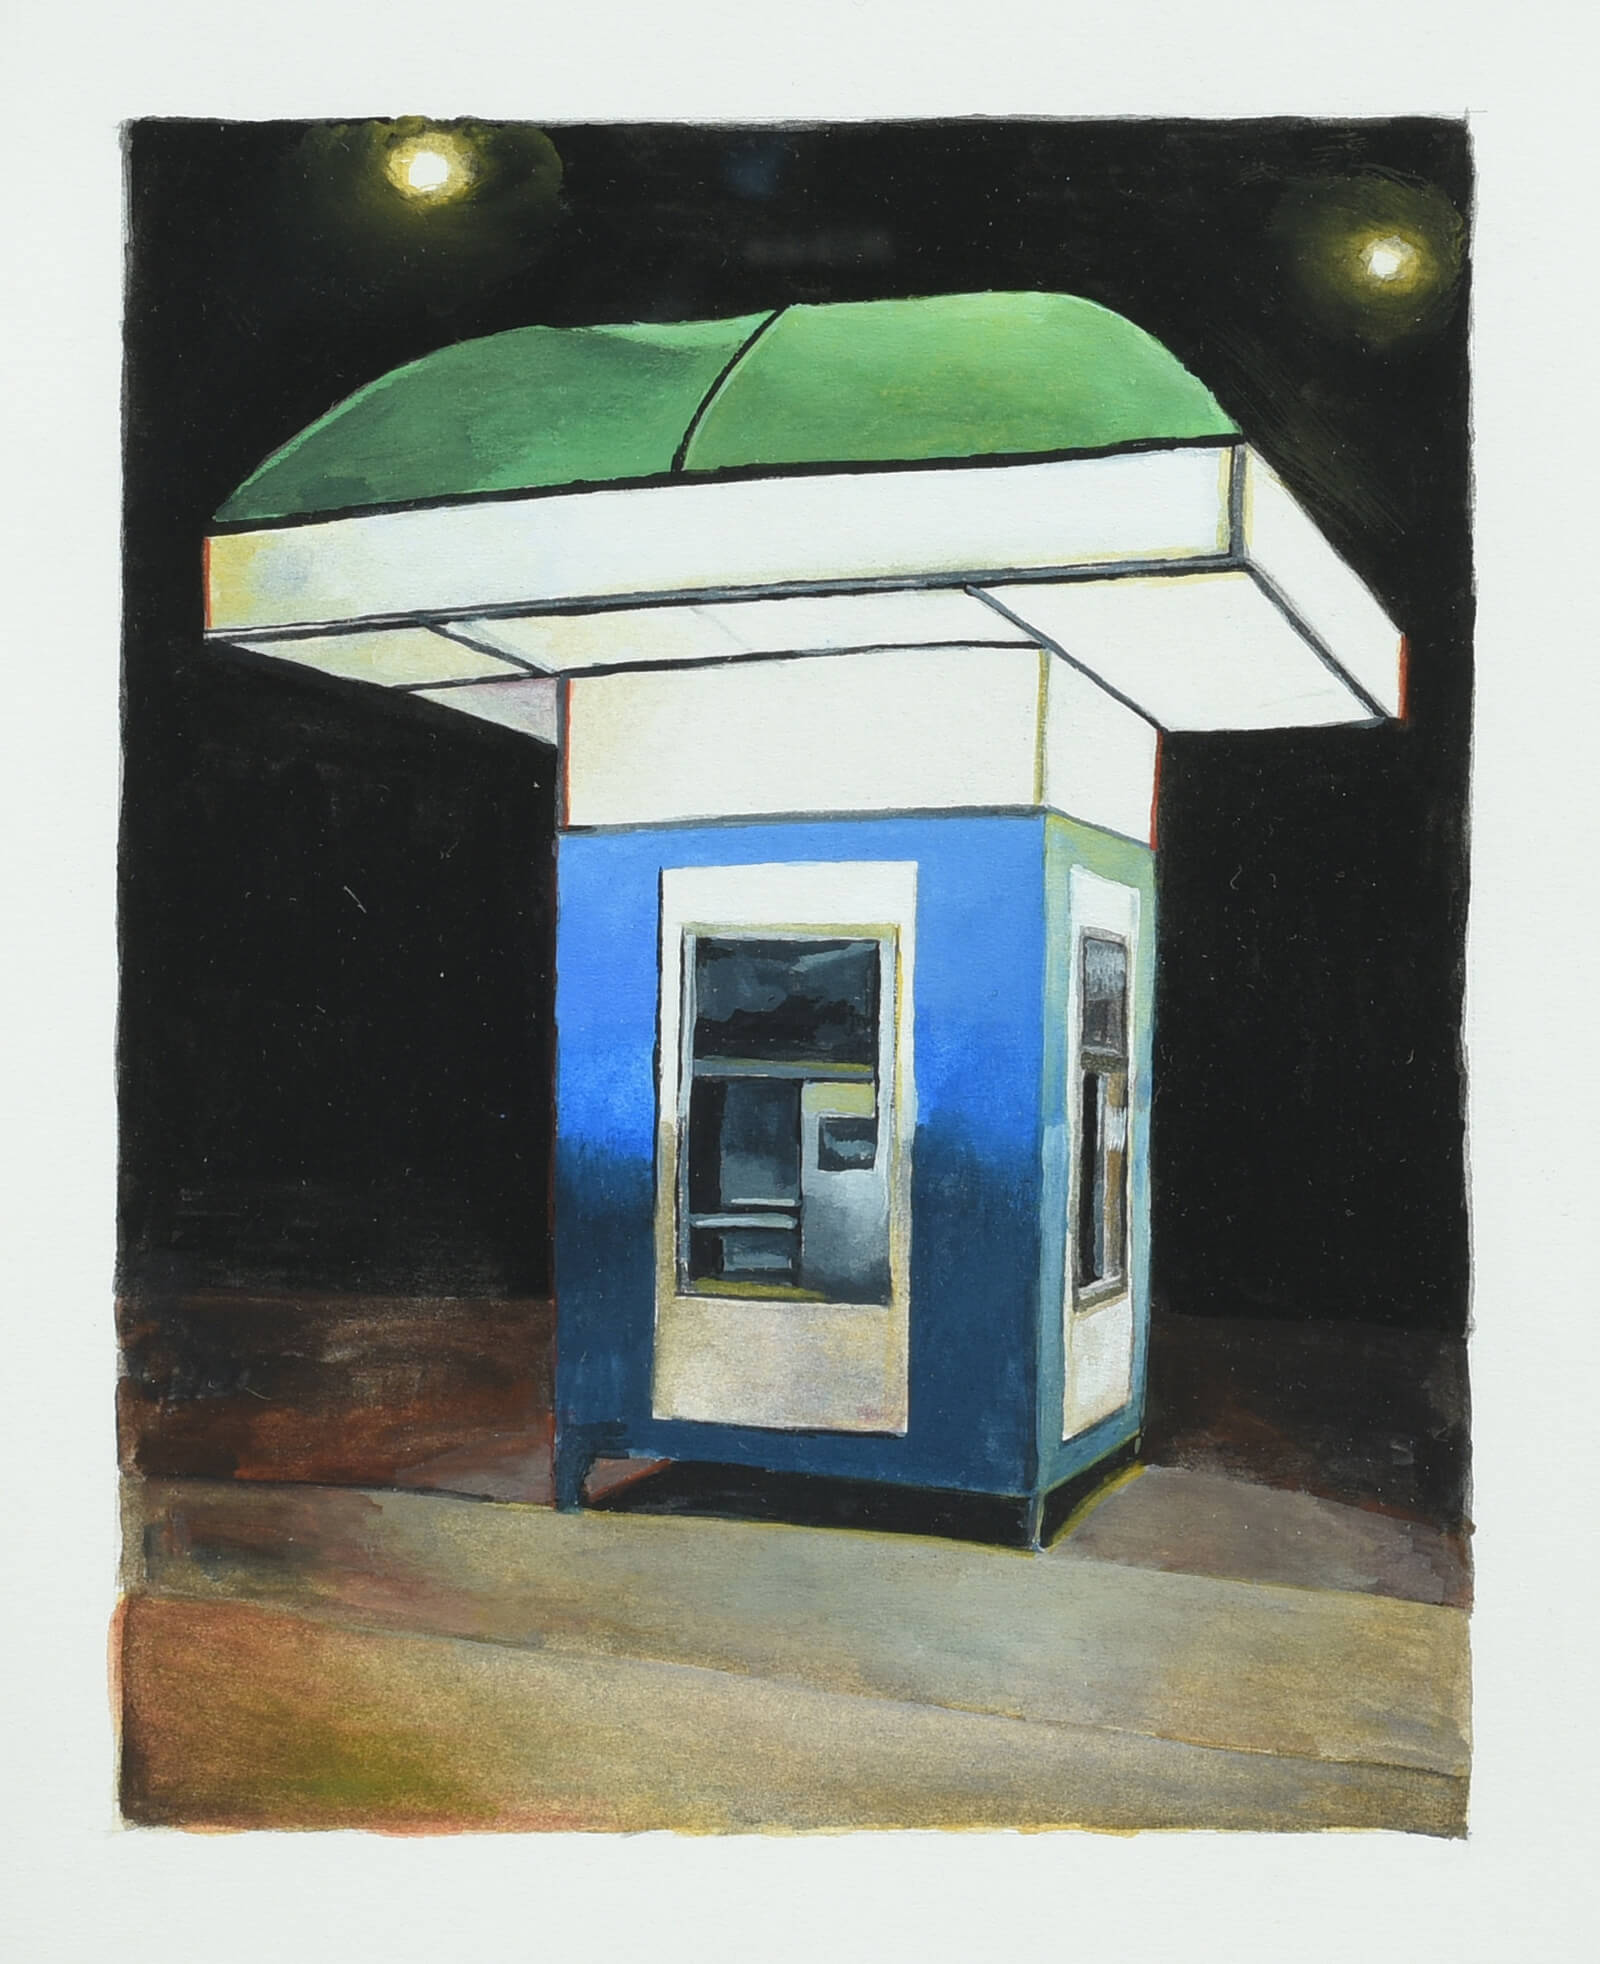 Image of artwork Gasoline Pump by Robert Olsen